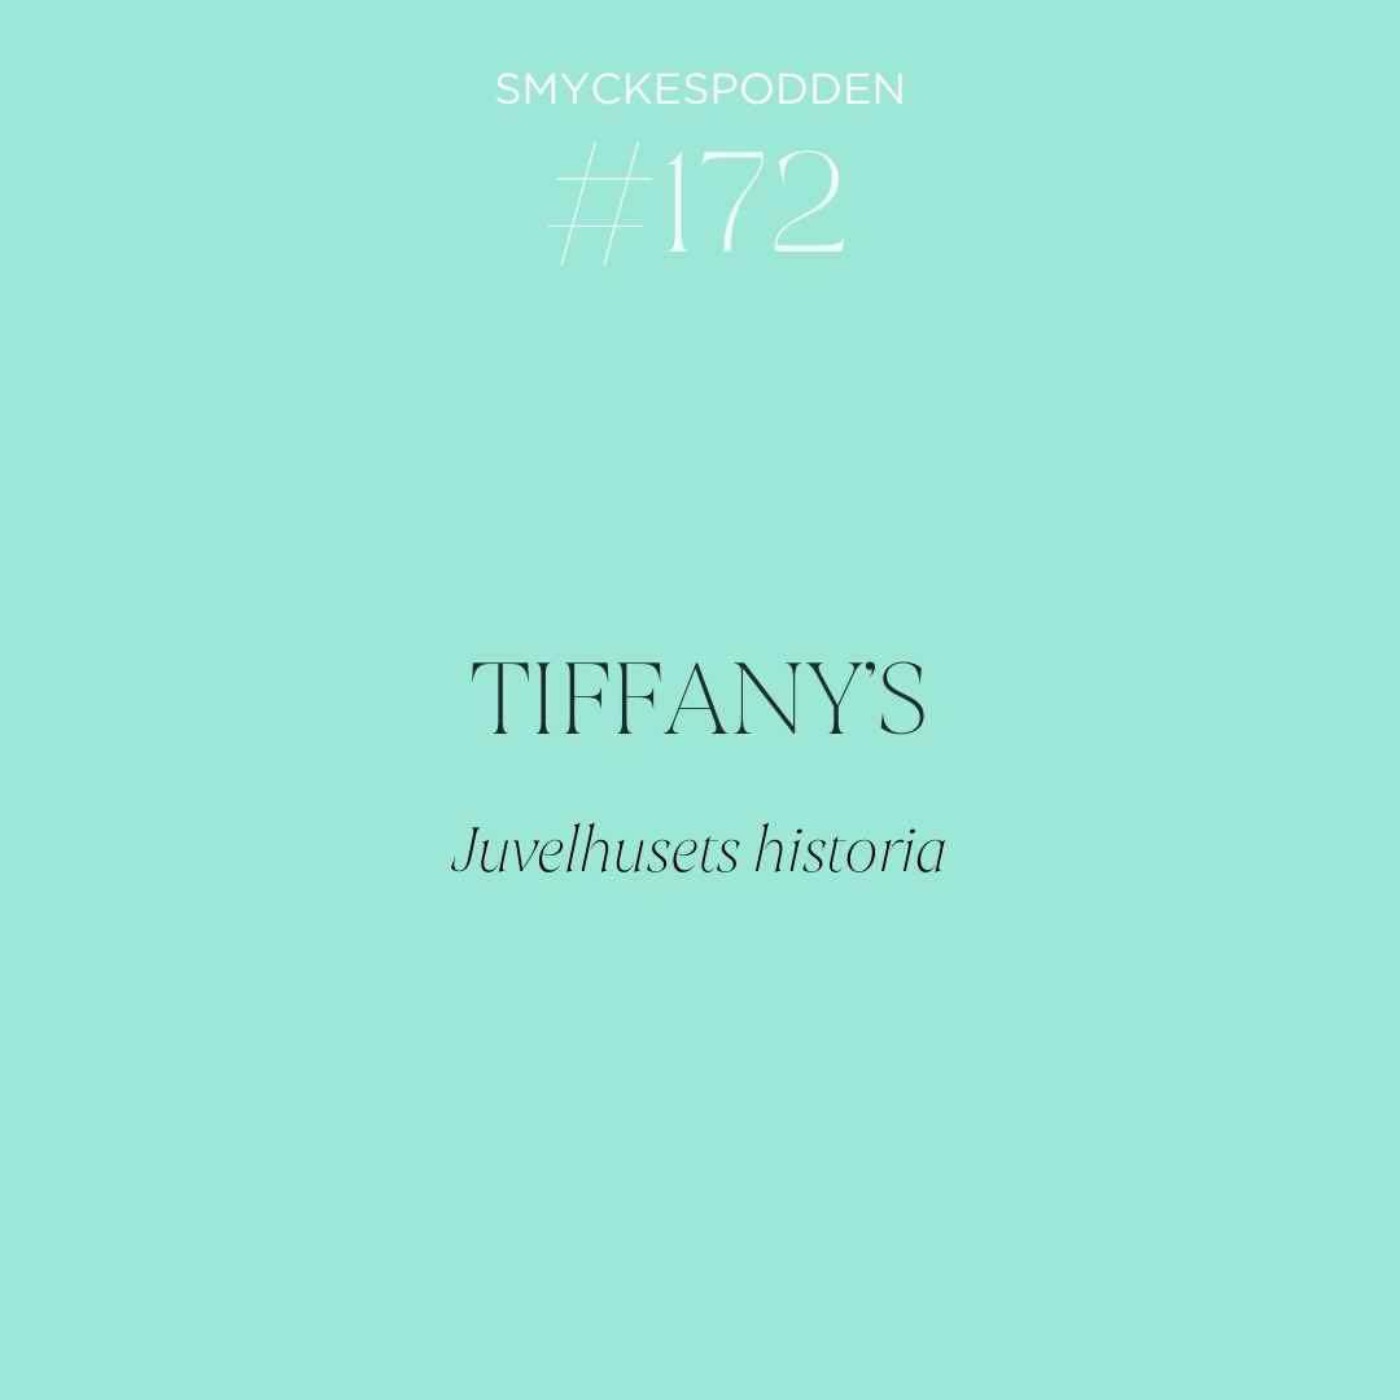 172. Tiffany’s - juvelhusets historia